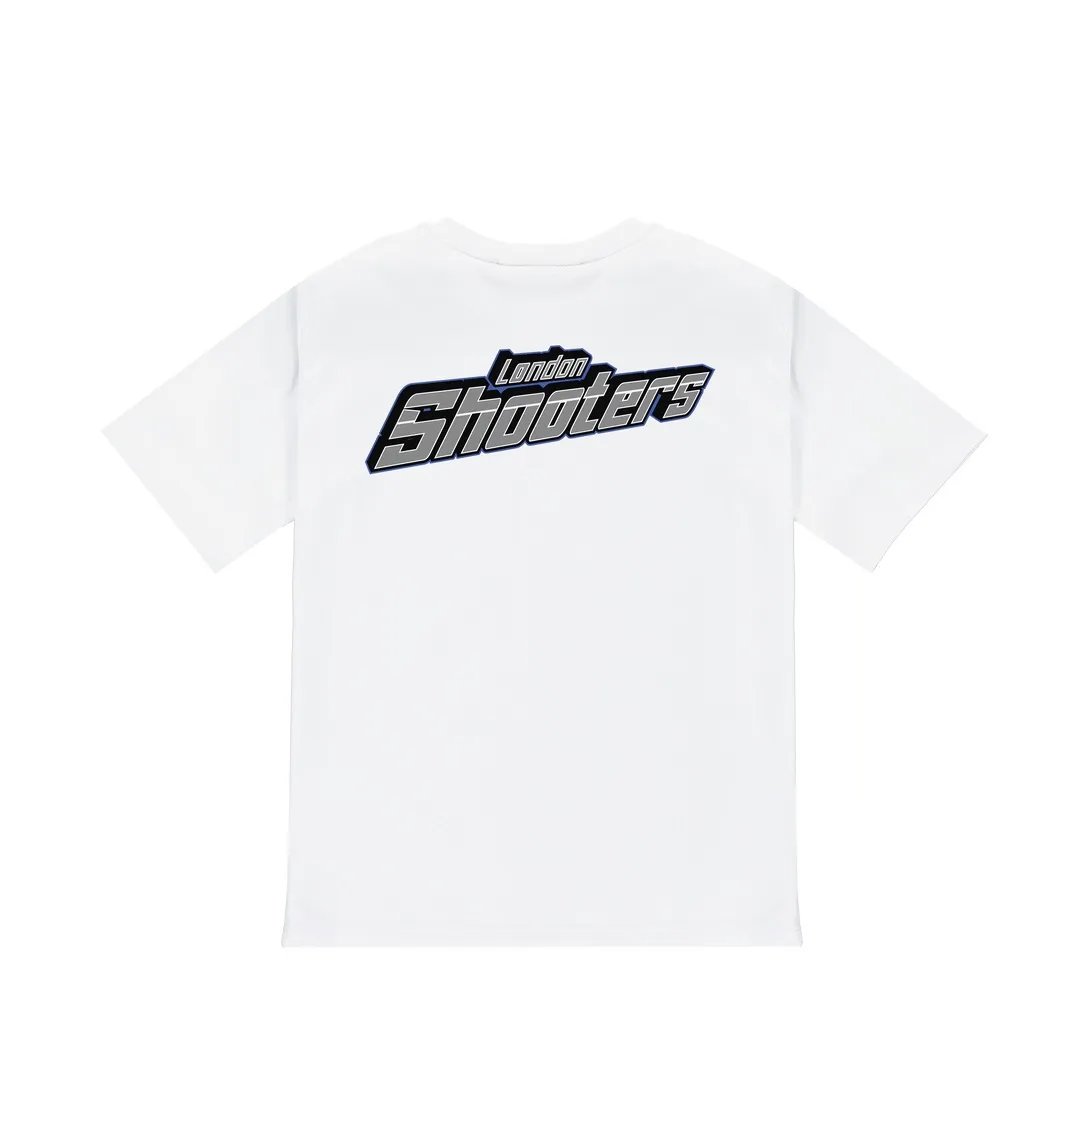 Top Trapstar London Men Fashion T Shirt Shirt Shirt Shirt Shirt Shirt Shirt Chenille Cotton Trend S-3XL